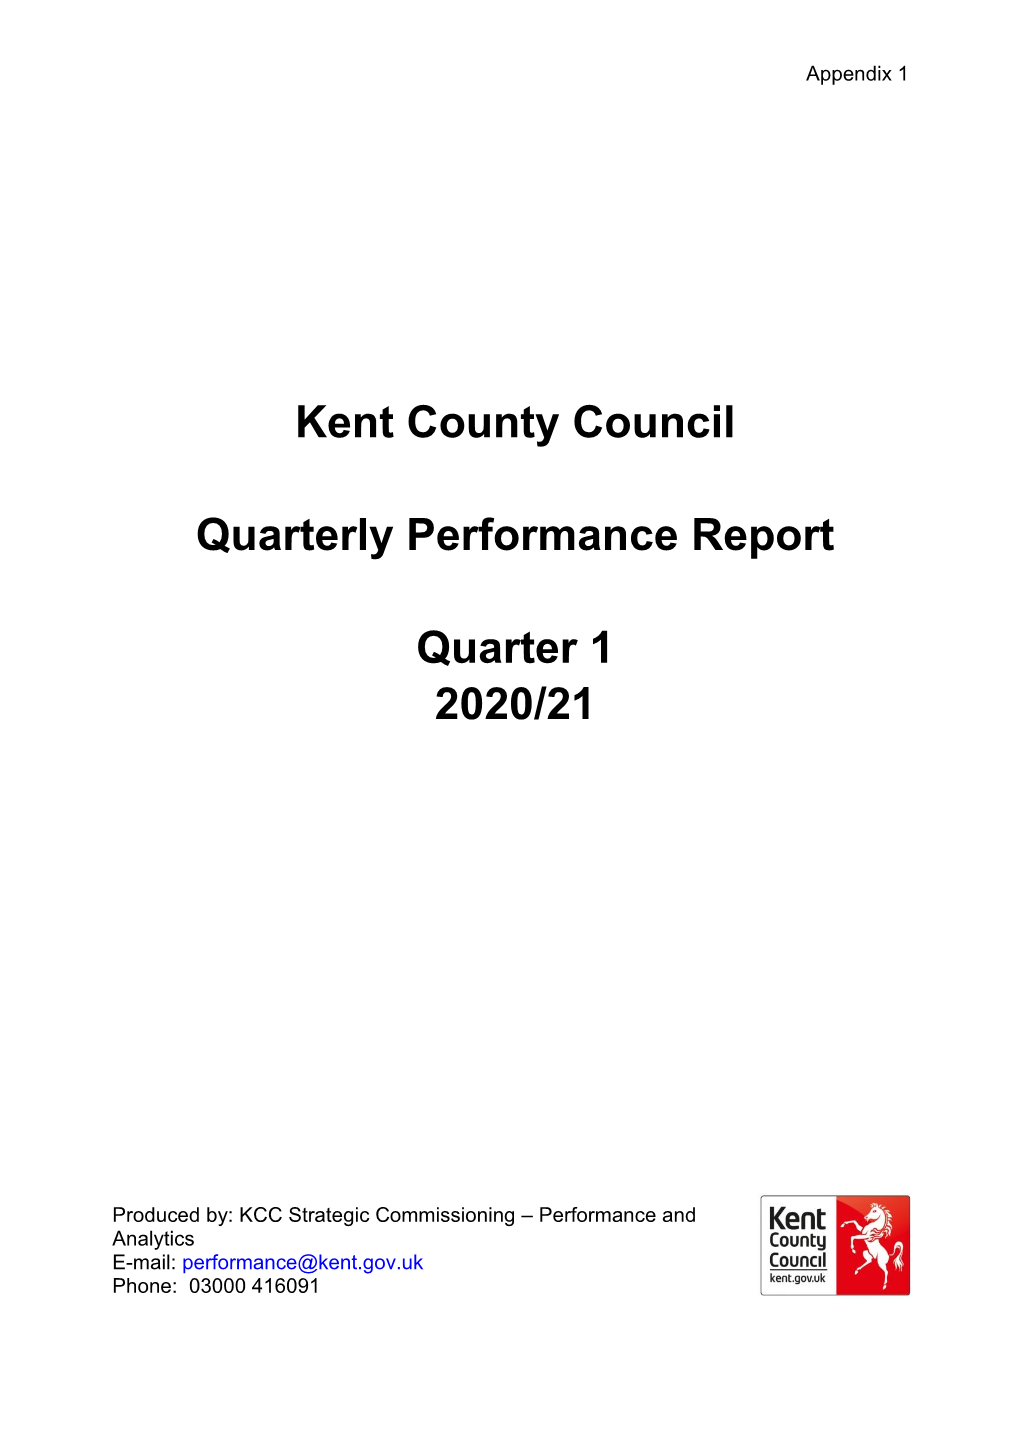 Kent County Council Quarterly Performance Report Quarter 1 2020